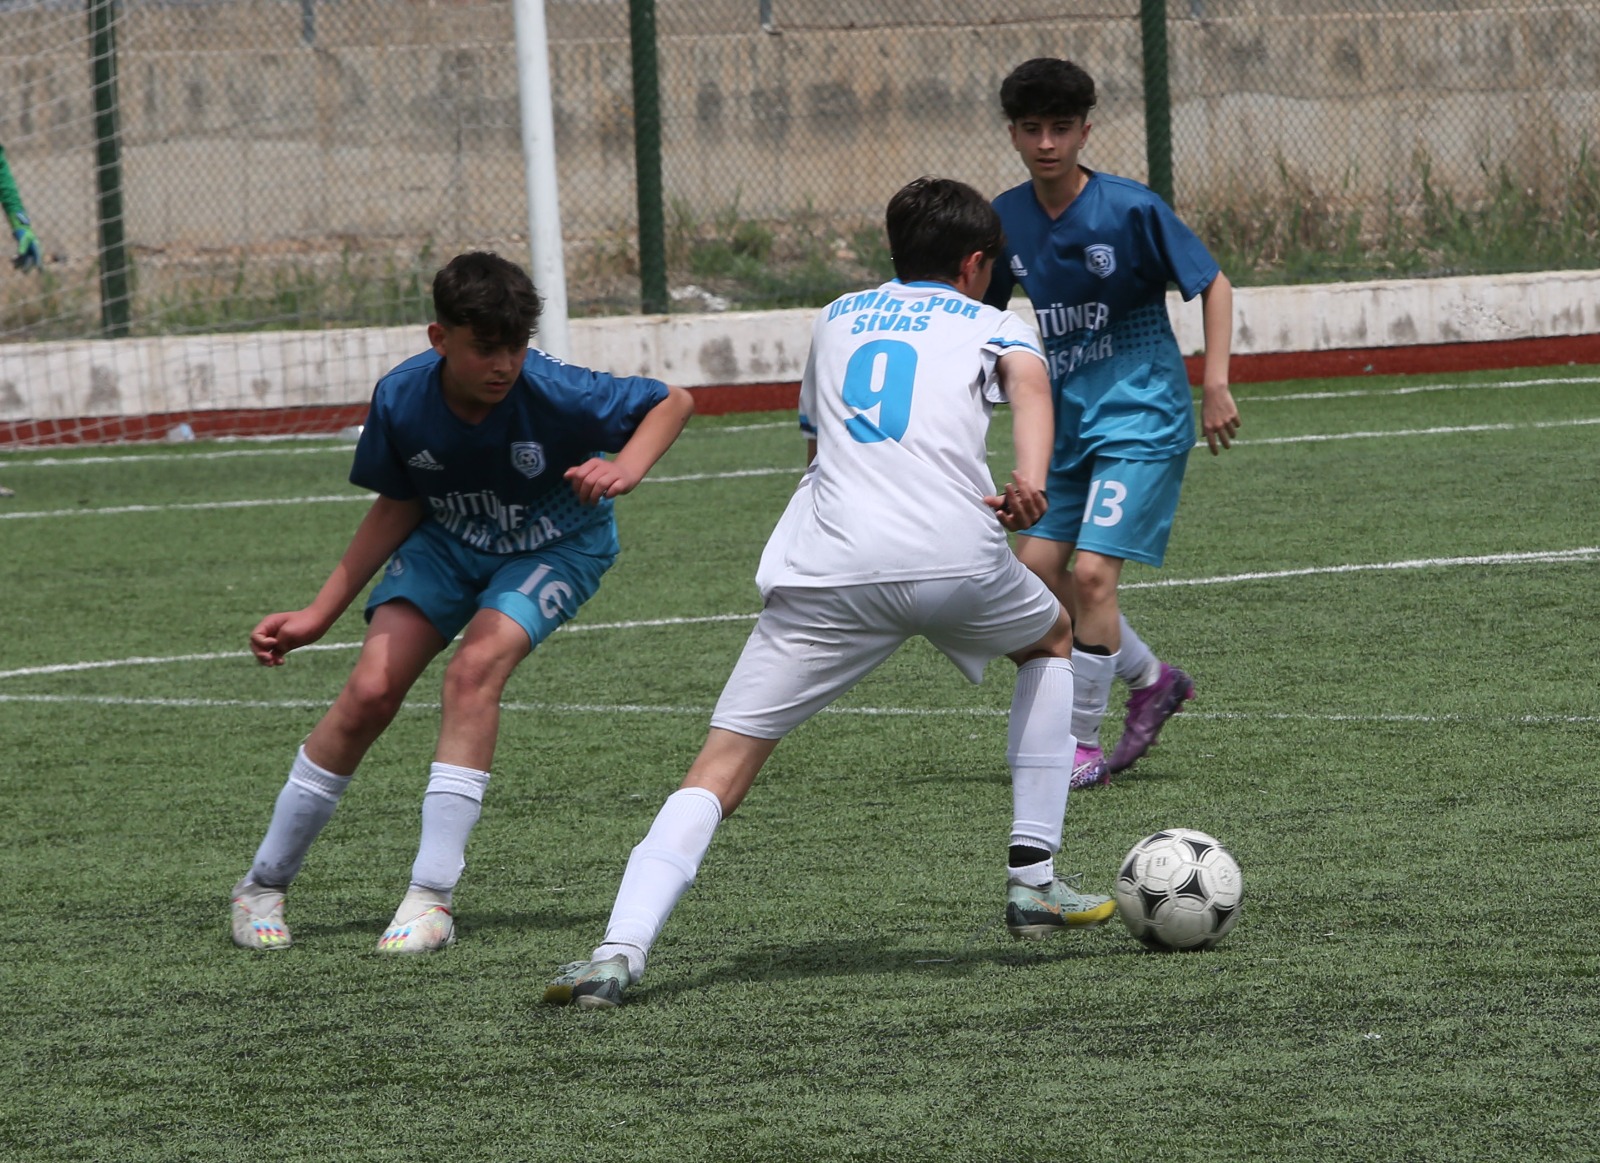 Sivas’ta Programda 3 U15 Maçı Var (1)